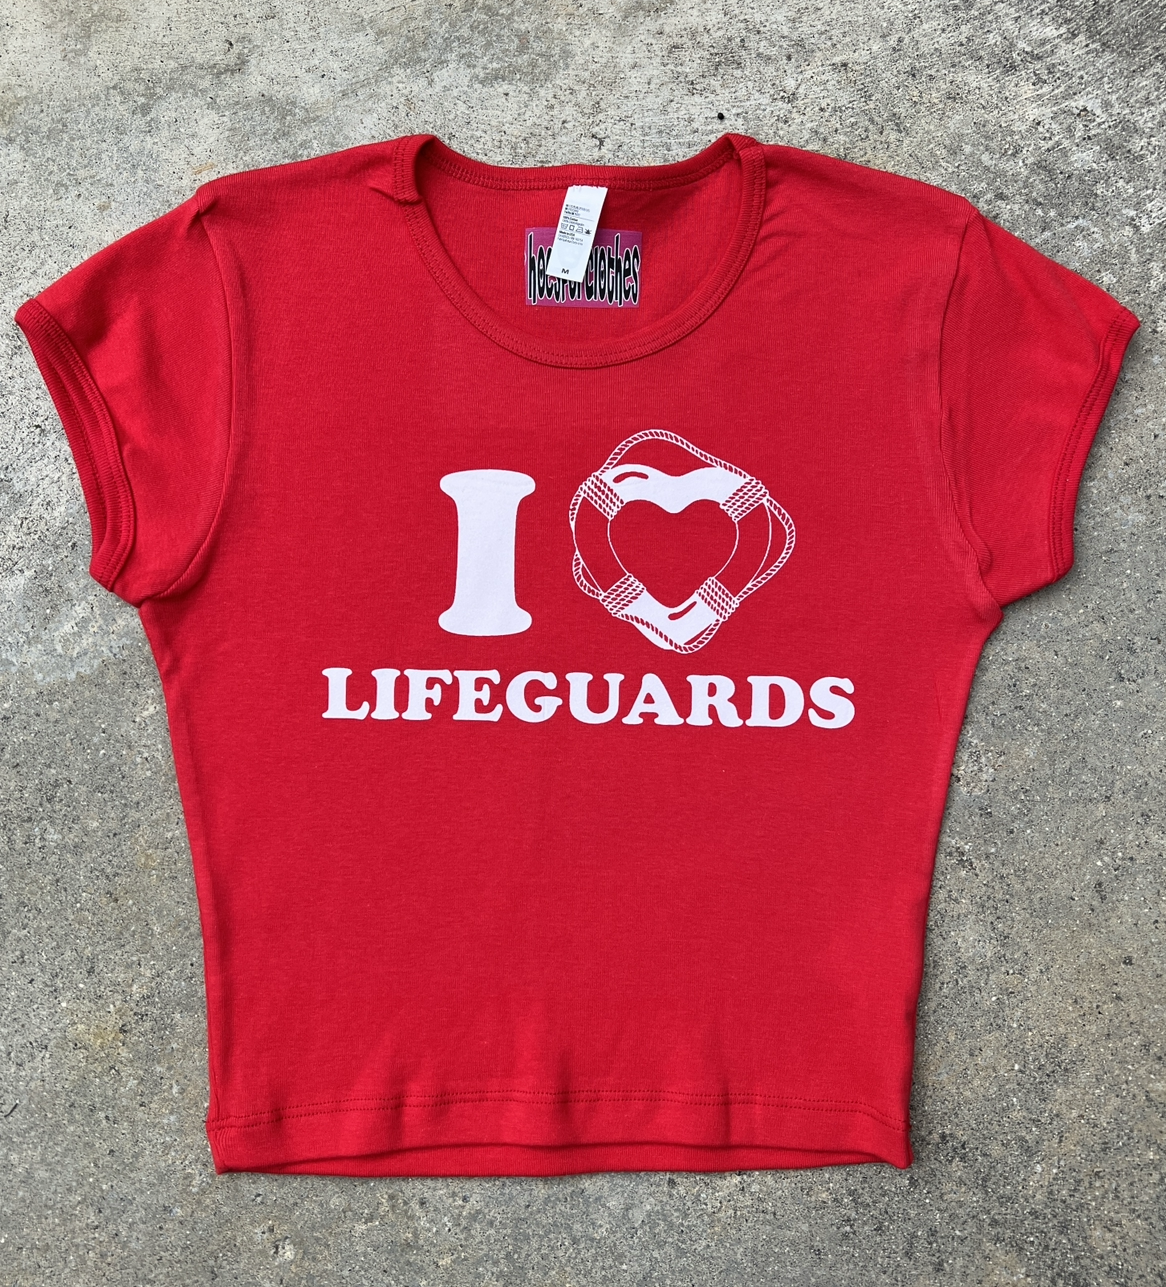 I <3 lifeguards baby tee